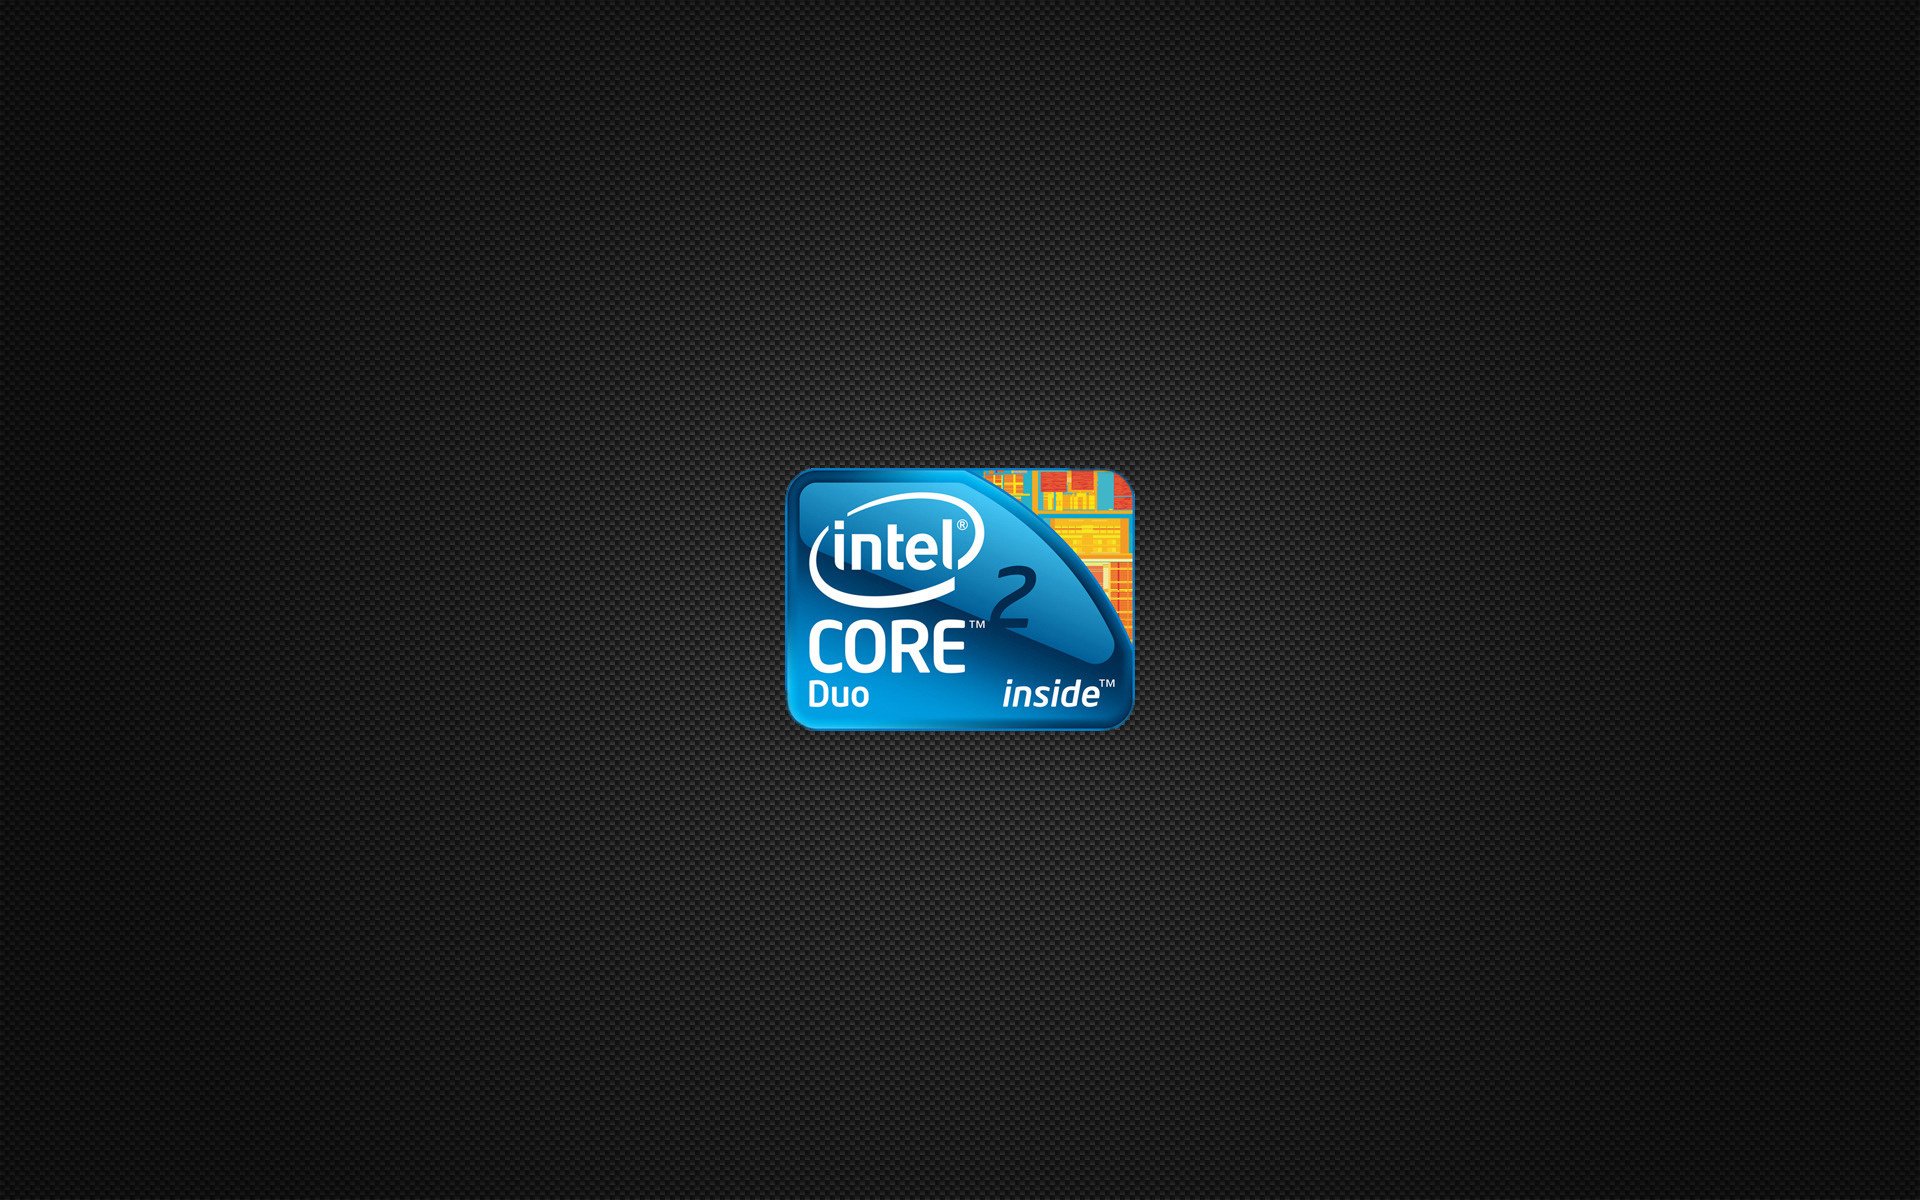 Intel logo in a blue square